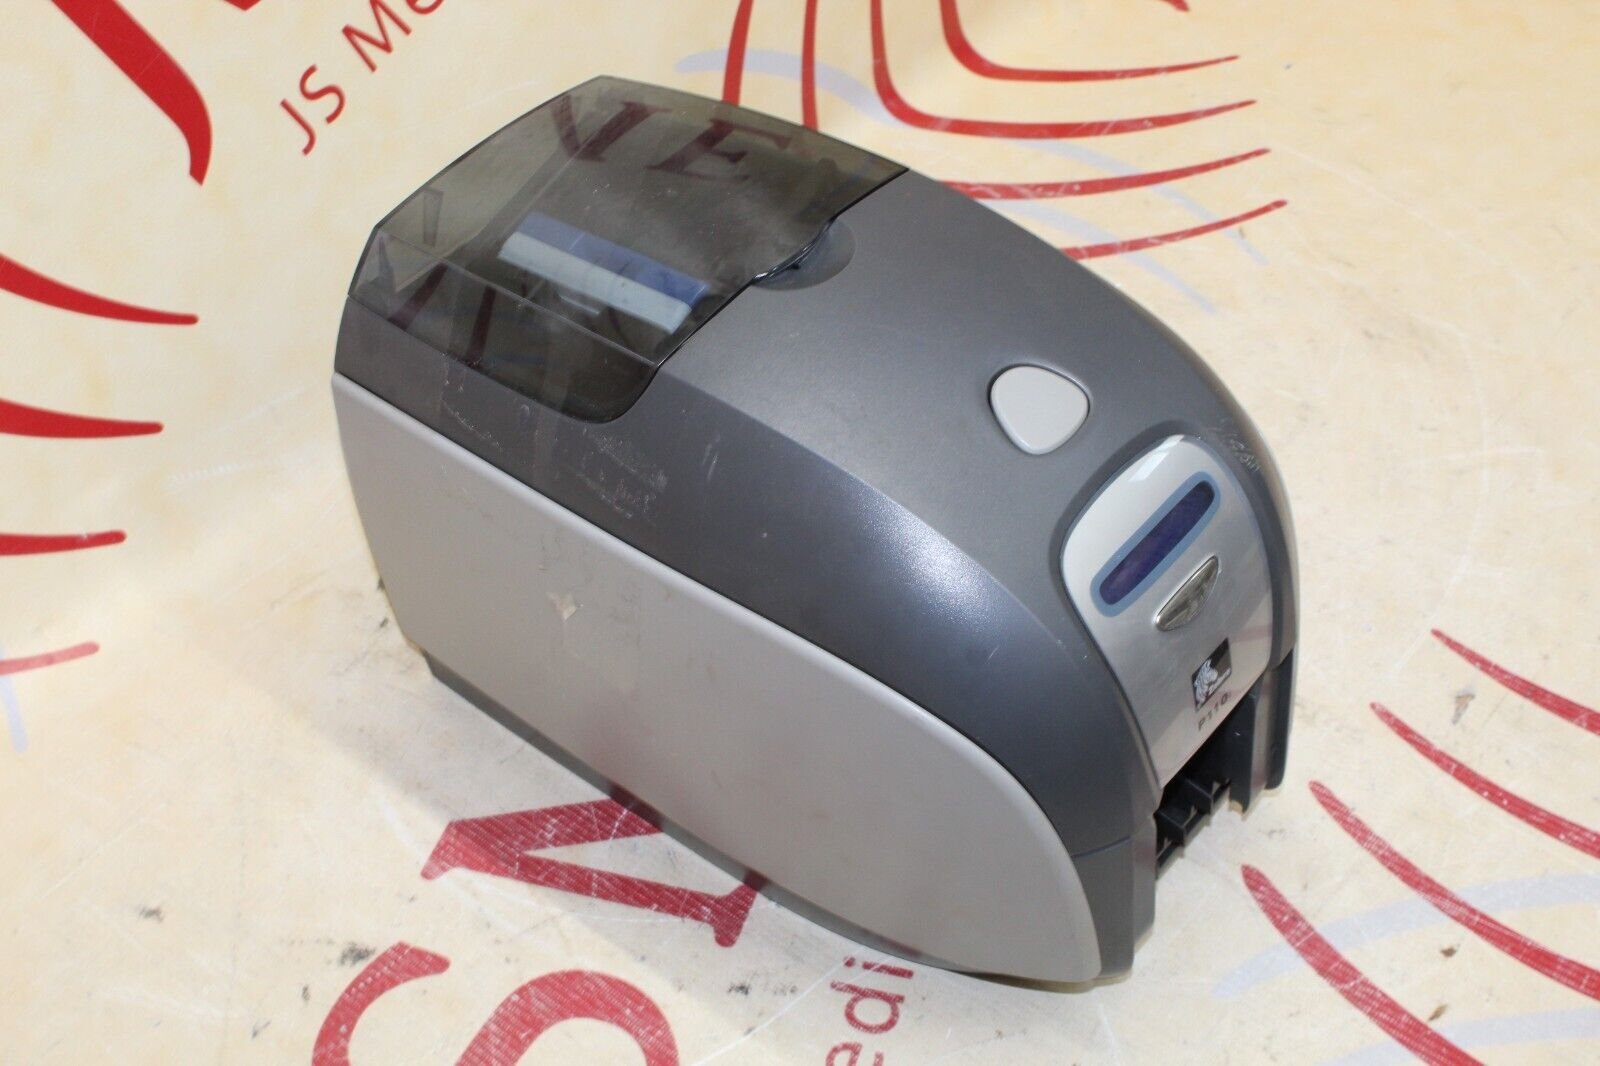 Zebra P110i Id Card Printer Js Medical Equipment 3392